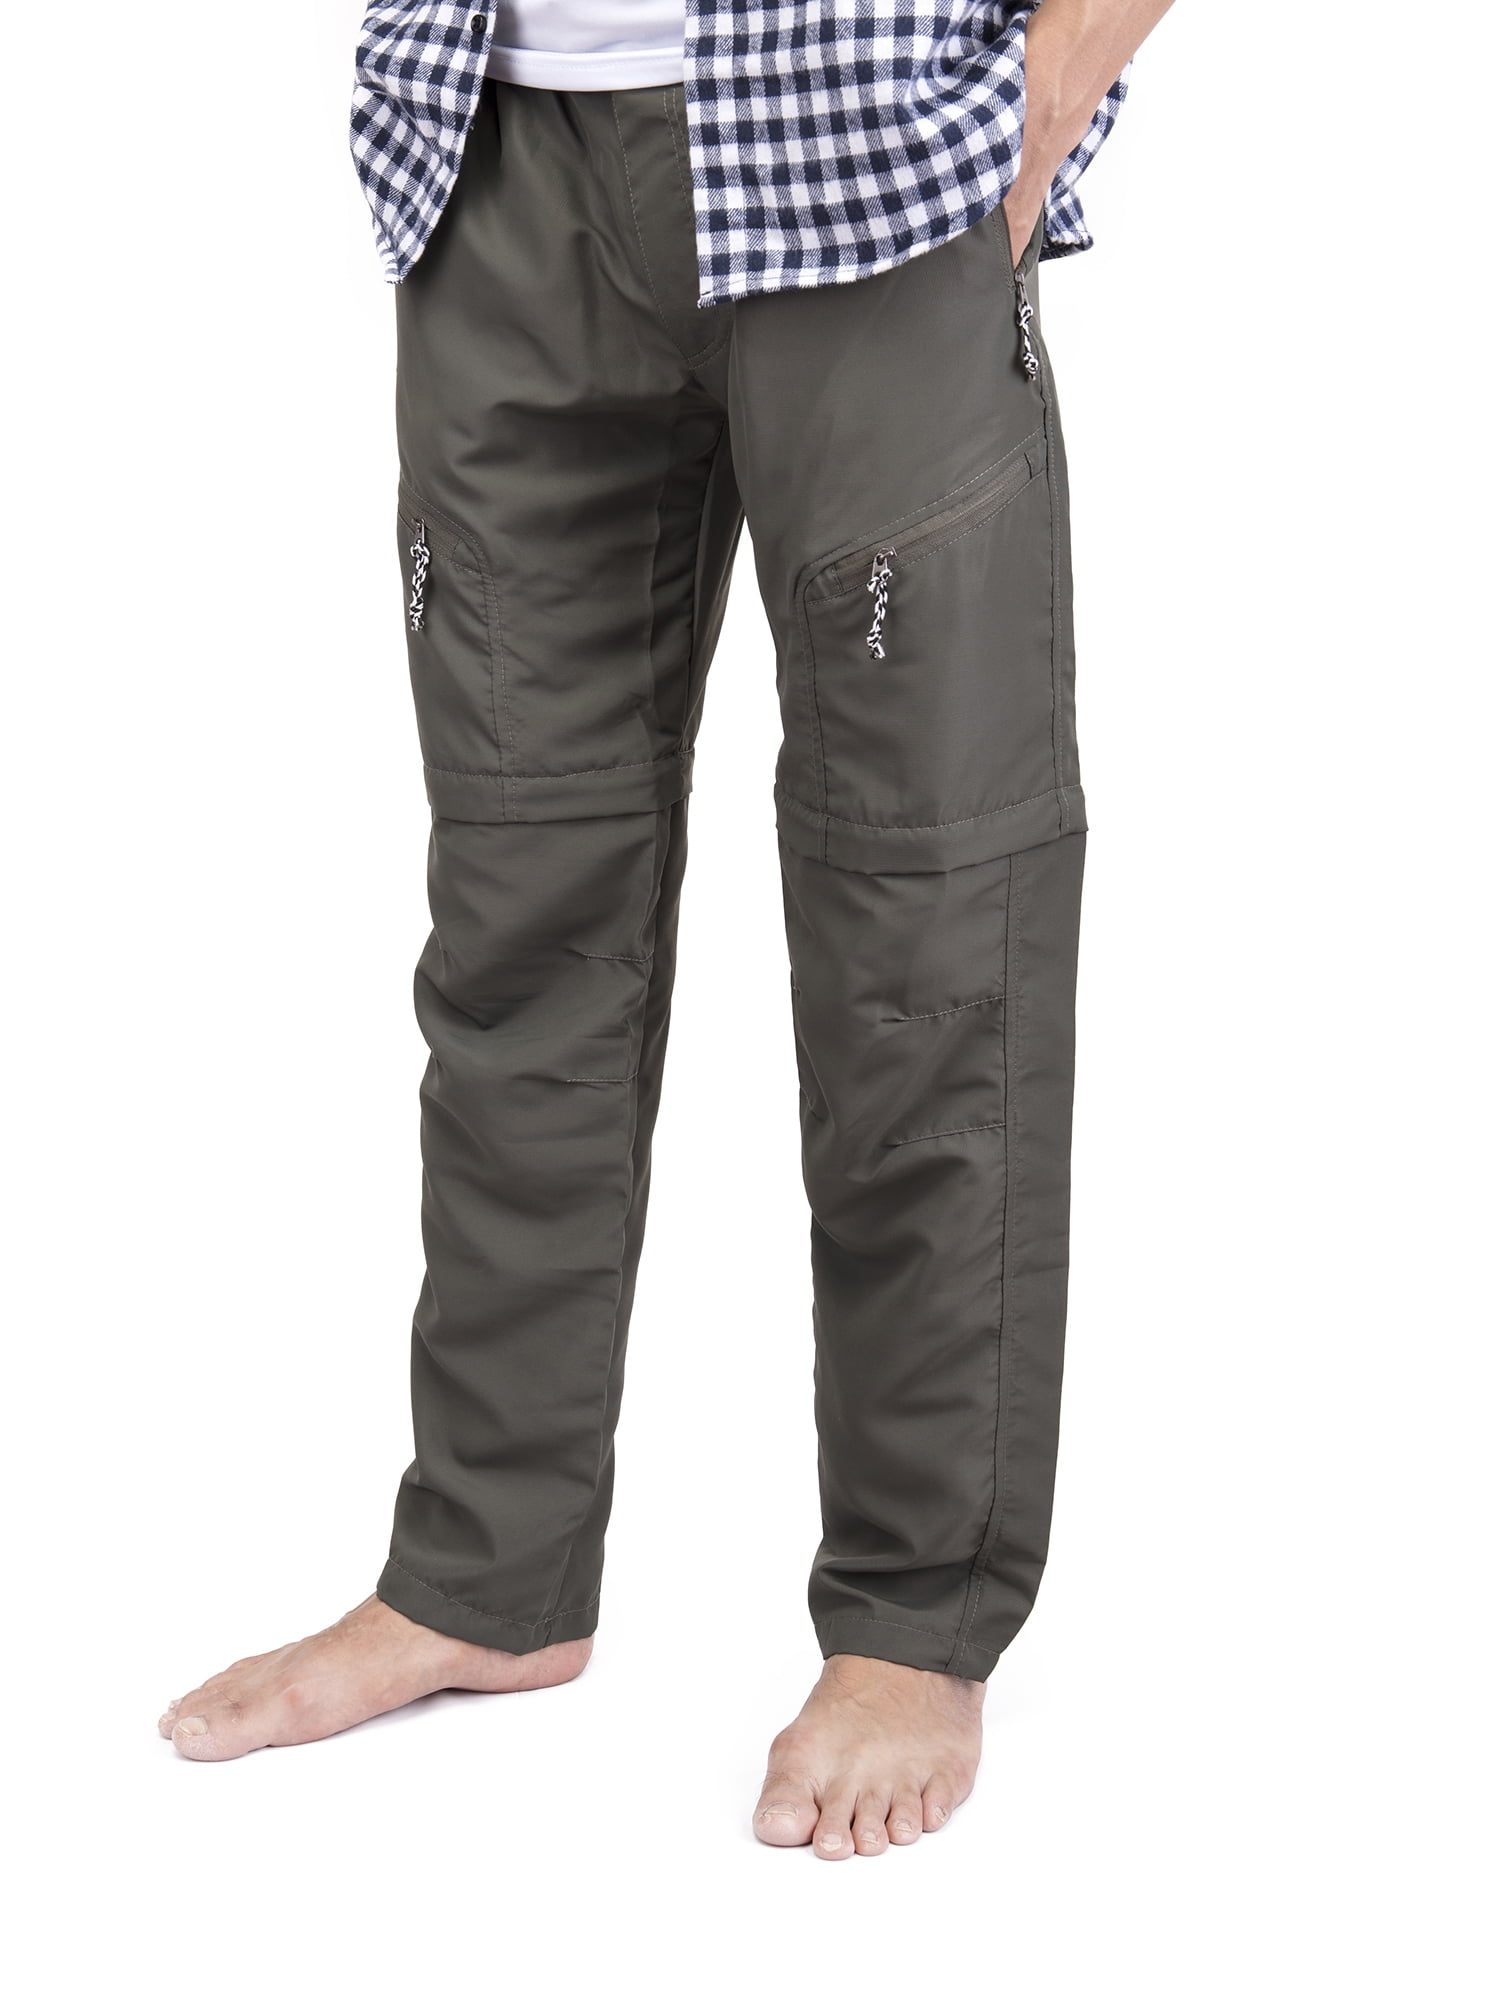 nylon pants for hiking